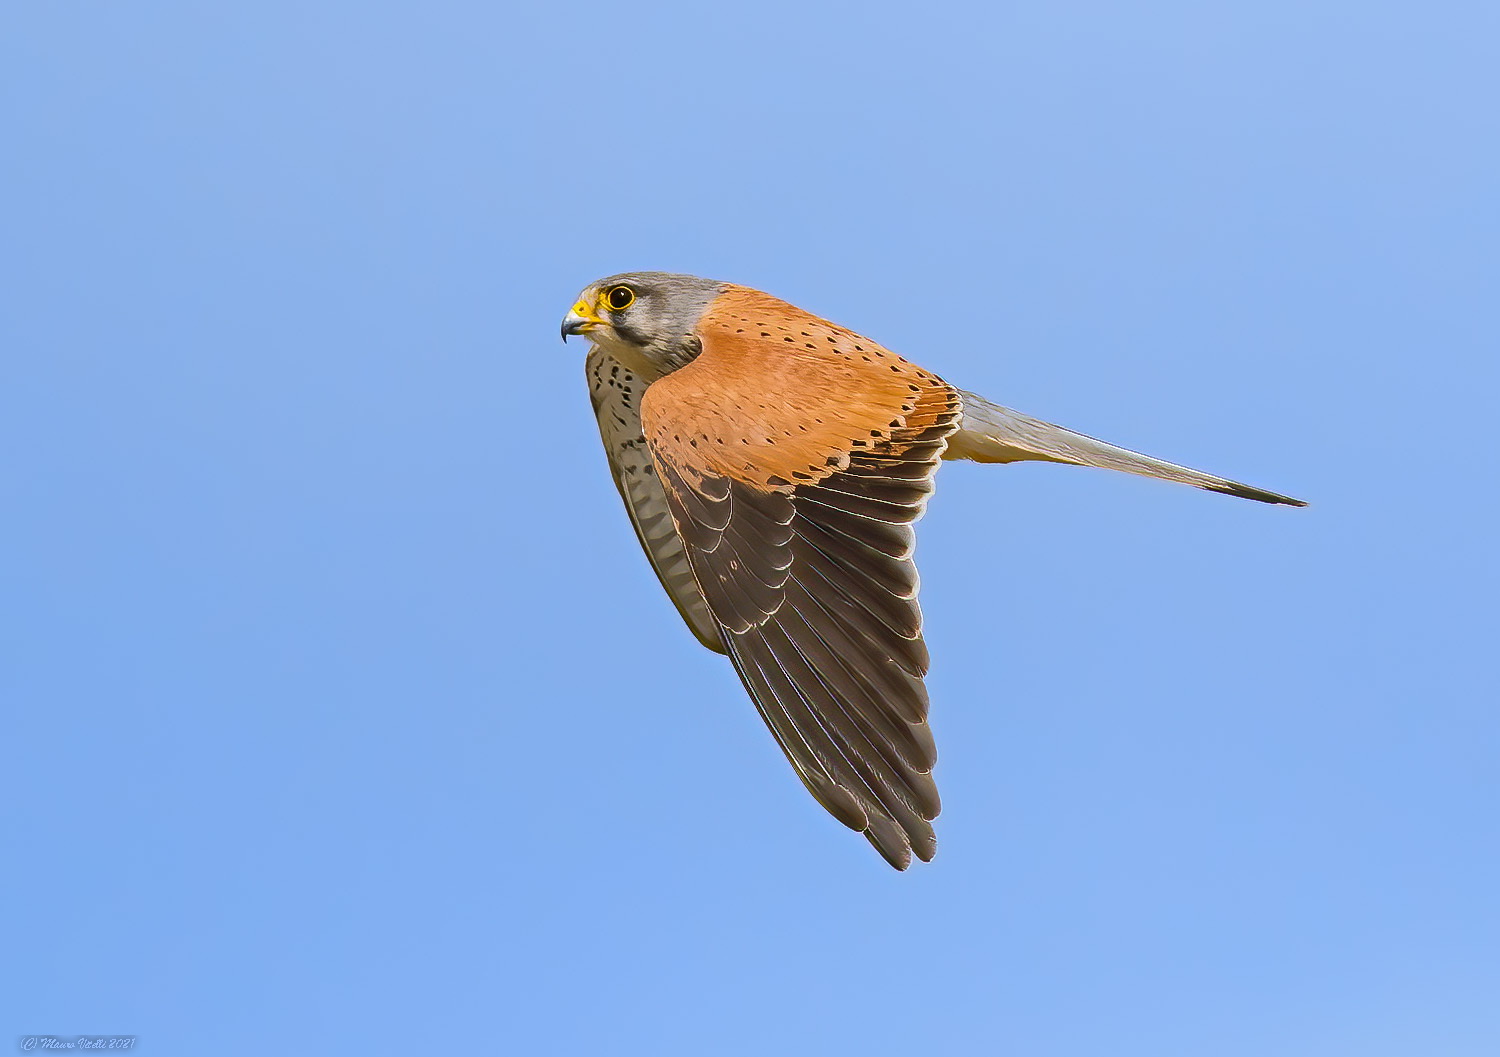 Gstreg (Falco tinnunculus)...